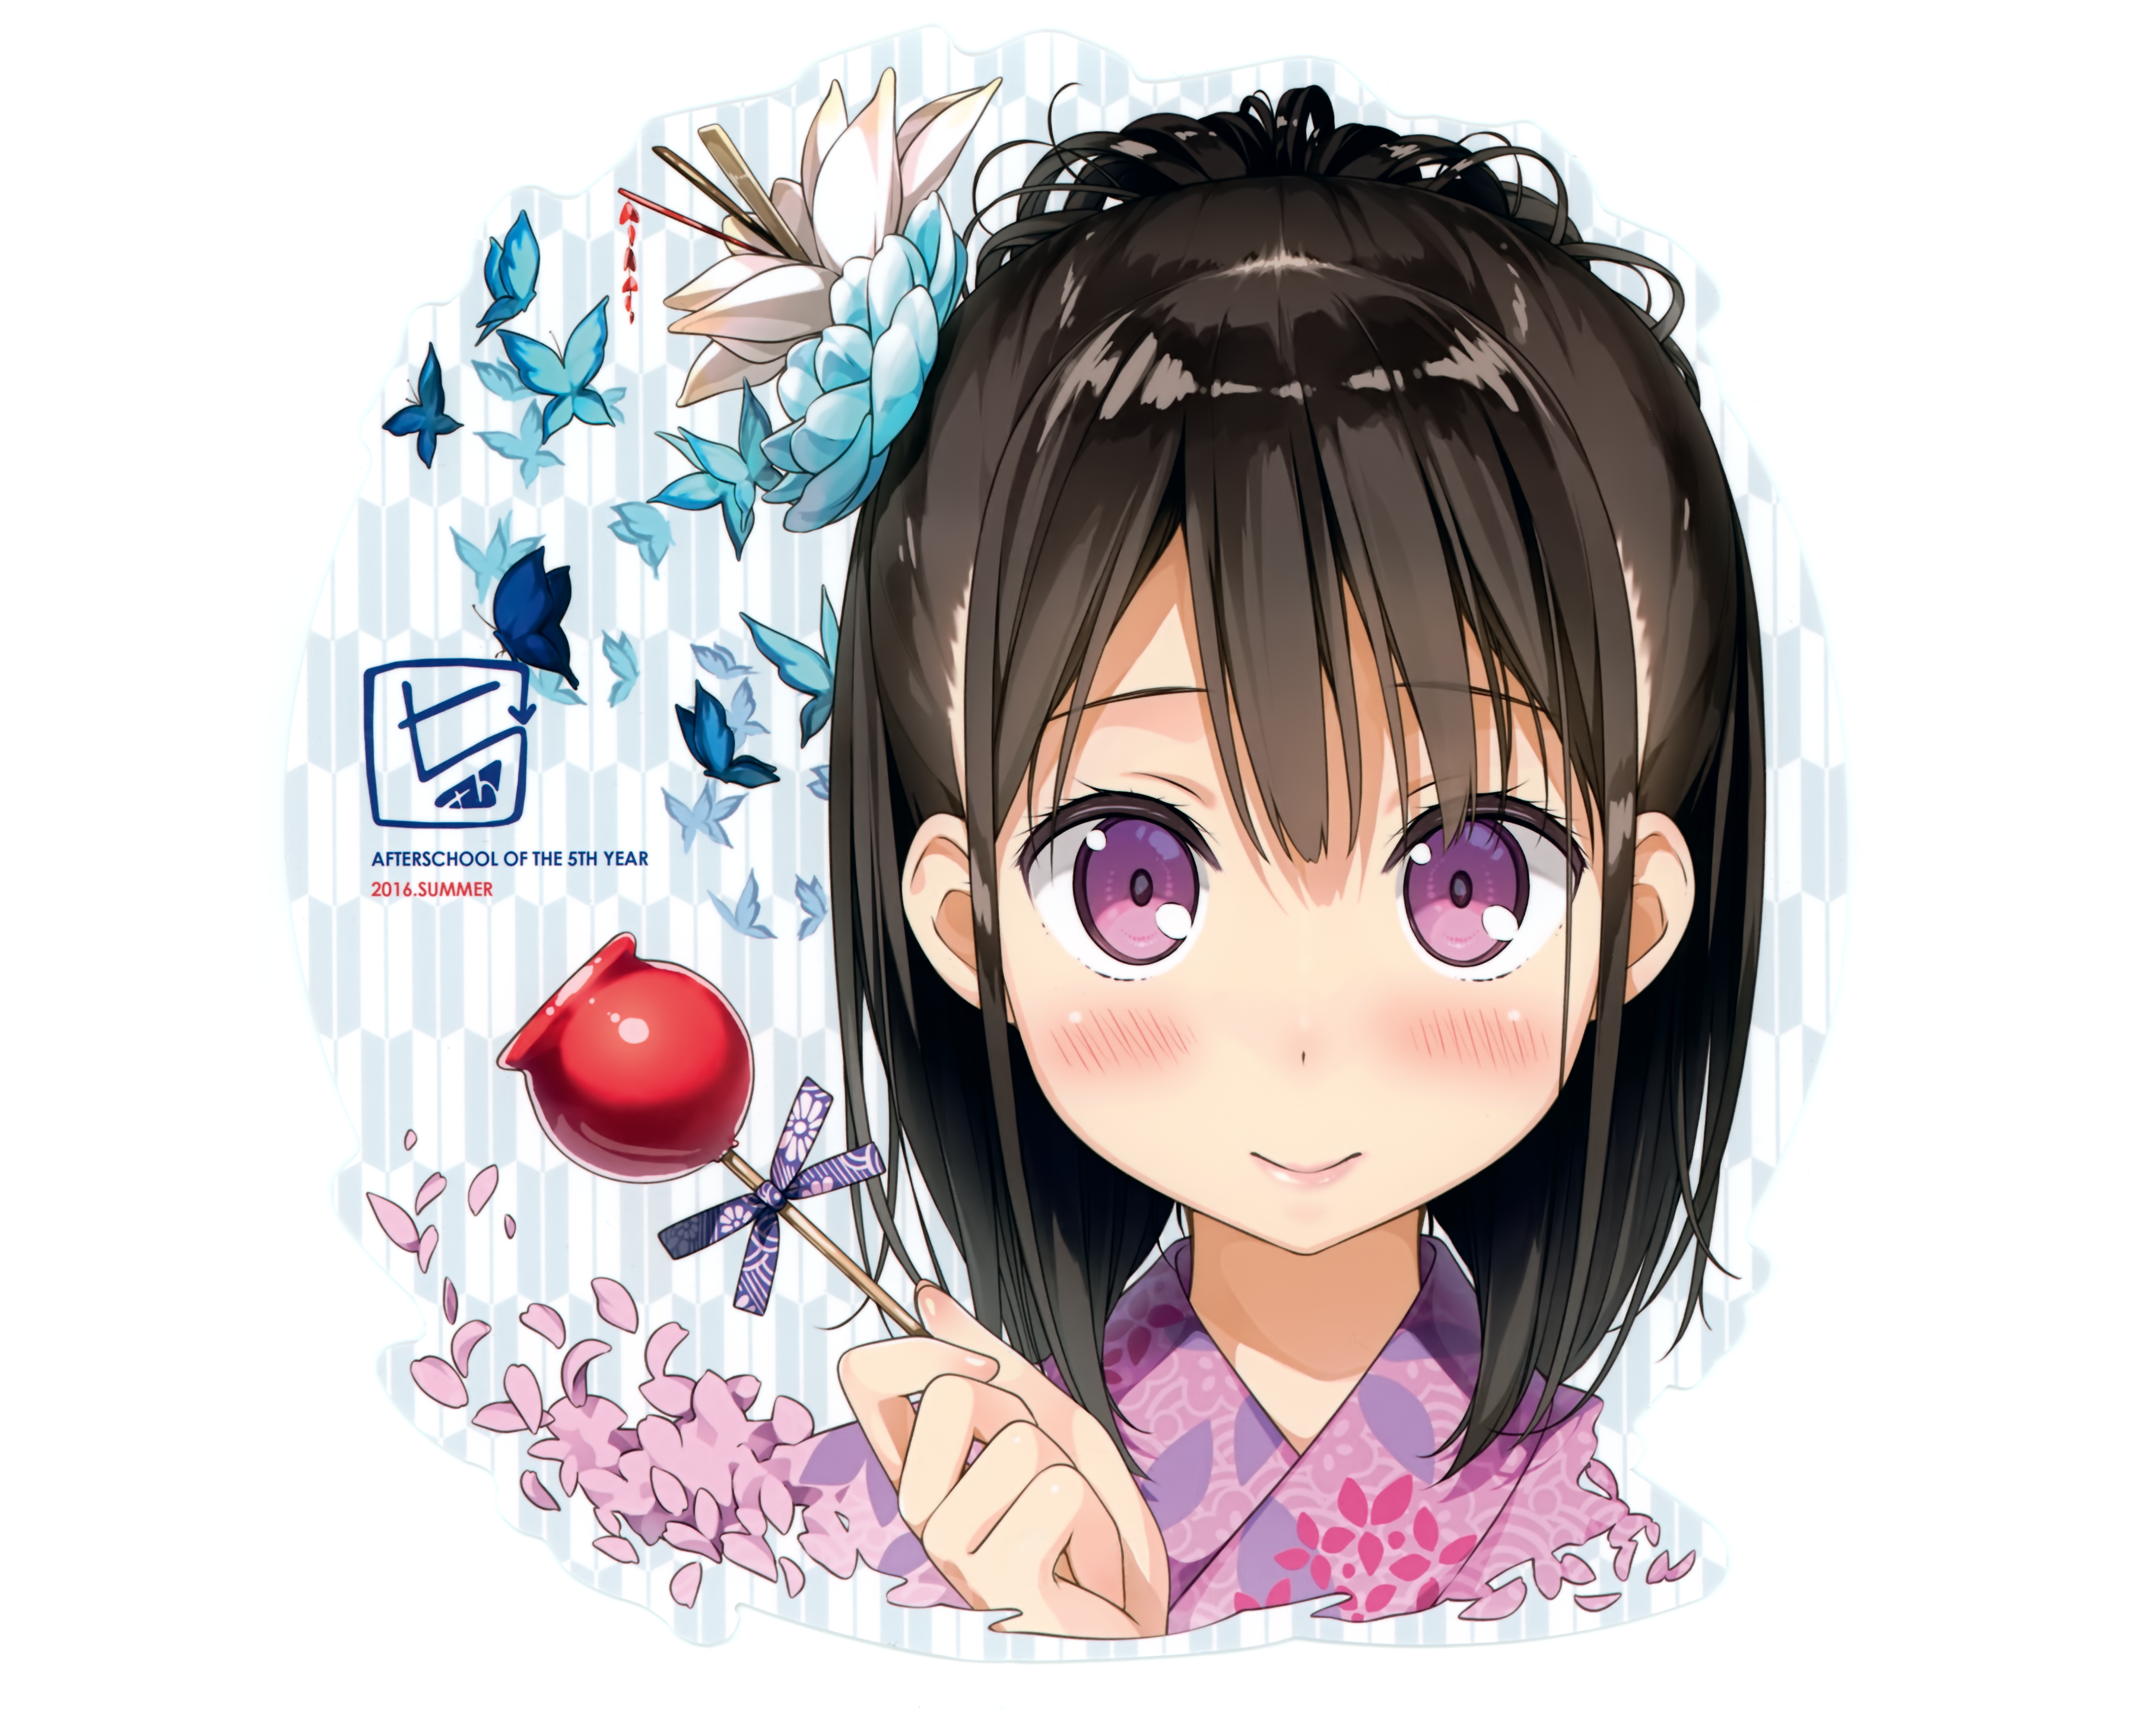 Anime 3633x2906 Afterschool of the 5th year anime girls Kantoku artwork blushing purple eyes dark hair